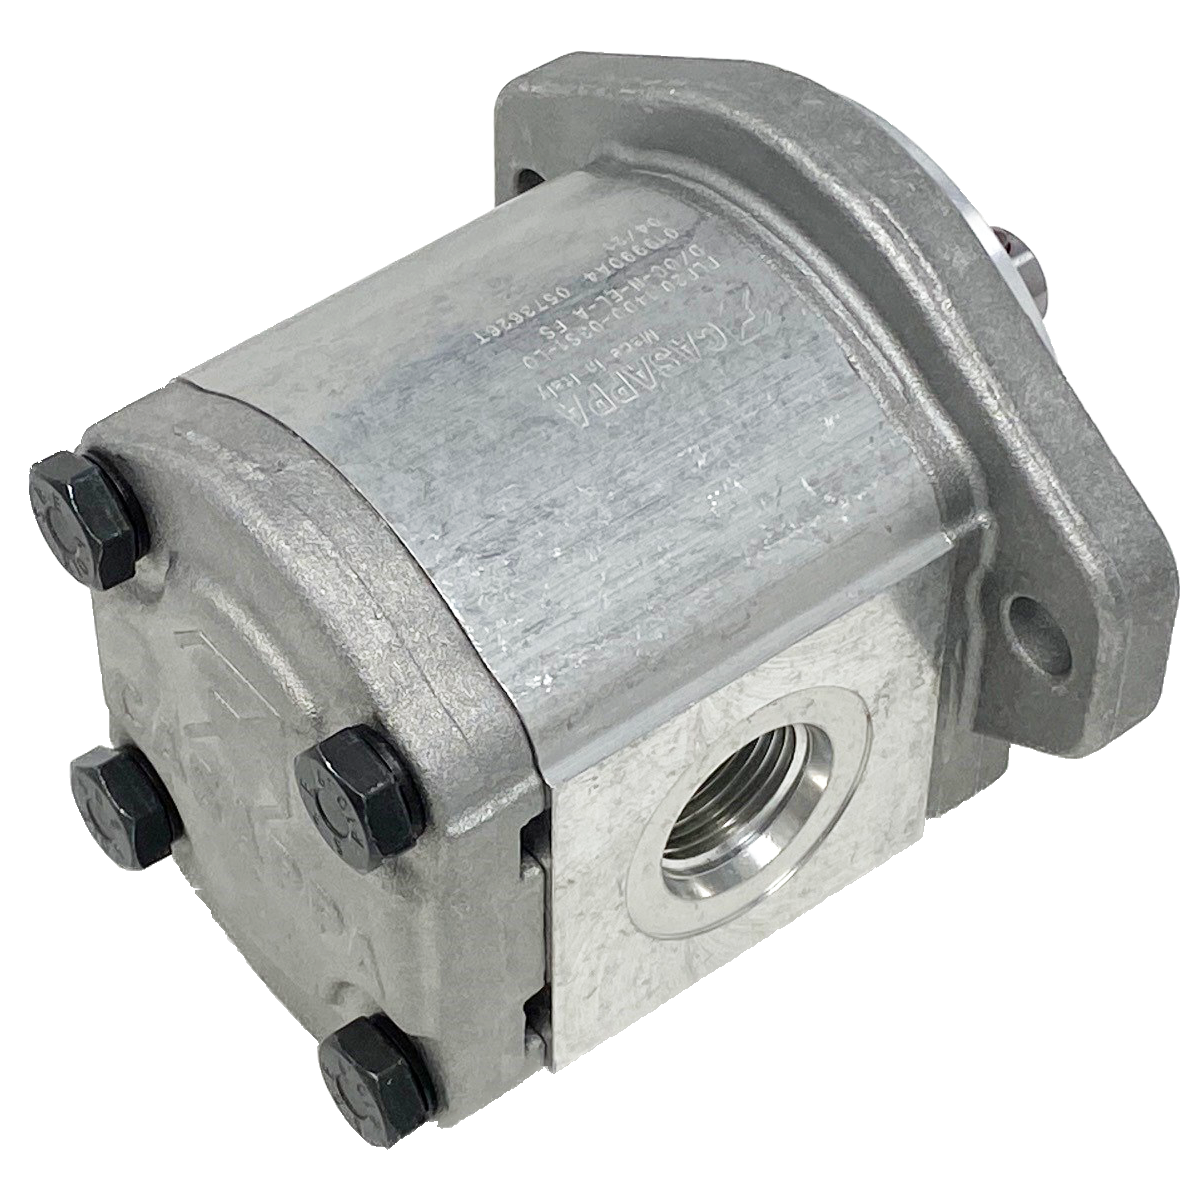 PLM20.20B0-31S1-LOC/OD-N-EL : Casappa Polaris Gear Motor, 21.14cc, 2900psi Rated, 3000RPM, Reversible Interior Drain, 5/8" Bore x 5/32" Key Shaft, SAE A 2-Bolt Flange, 0.625 (5/8") #10 SAE Inlet, 0.75 (3/4") #12 SAE Outlet, Aluminum Body & Flange